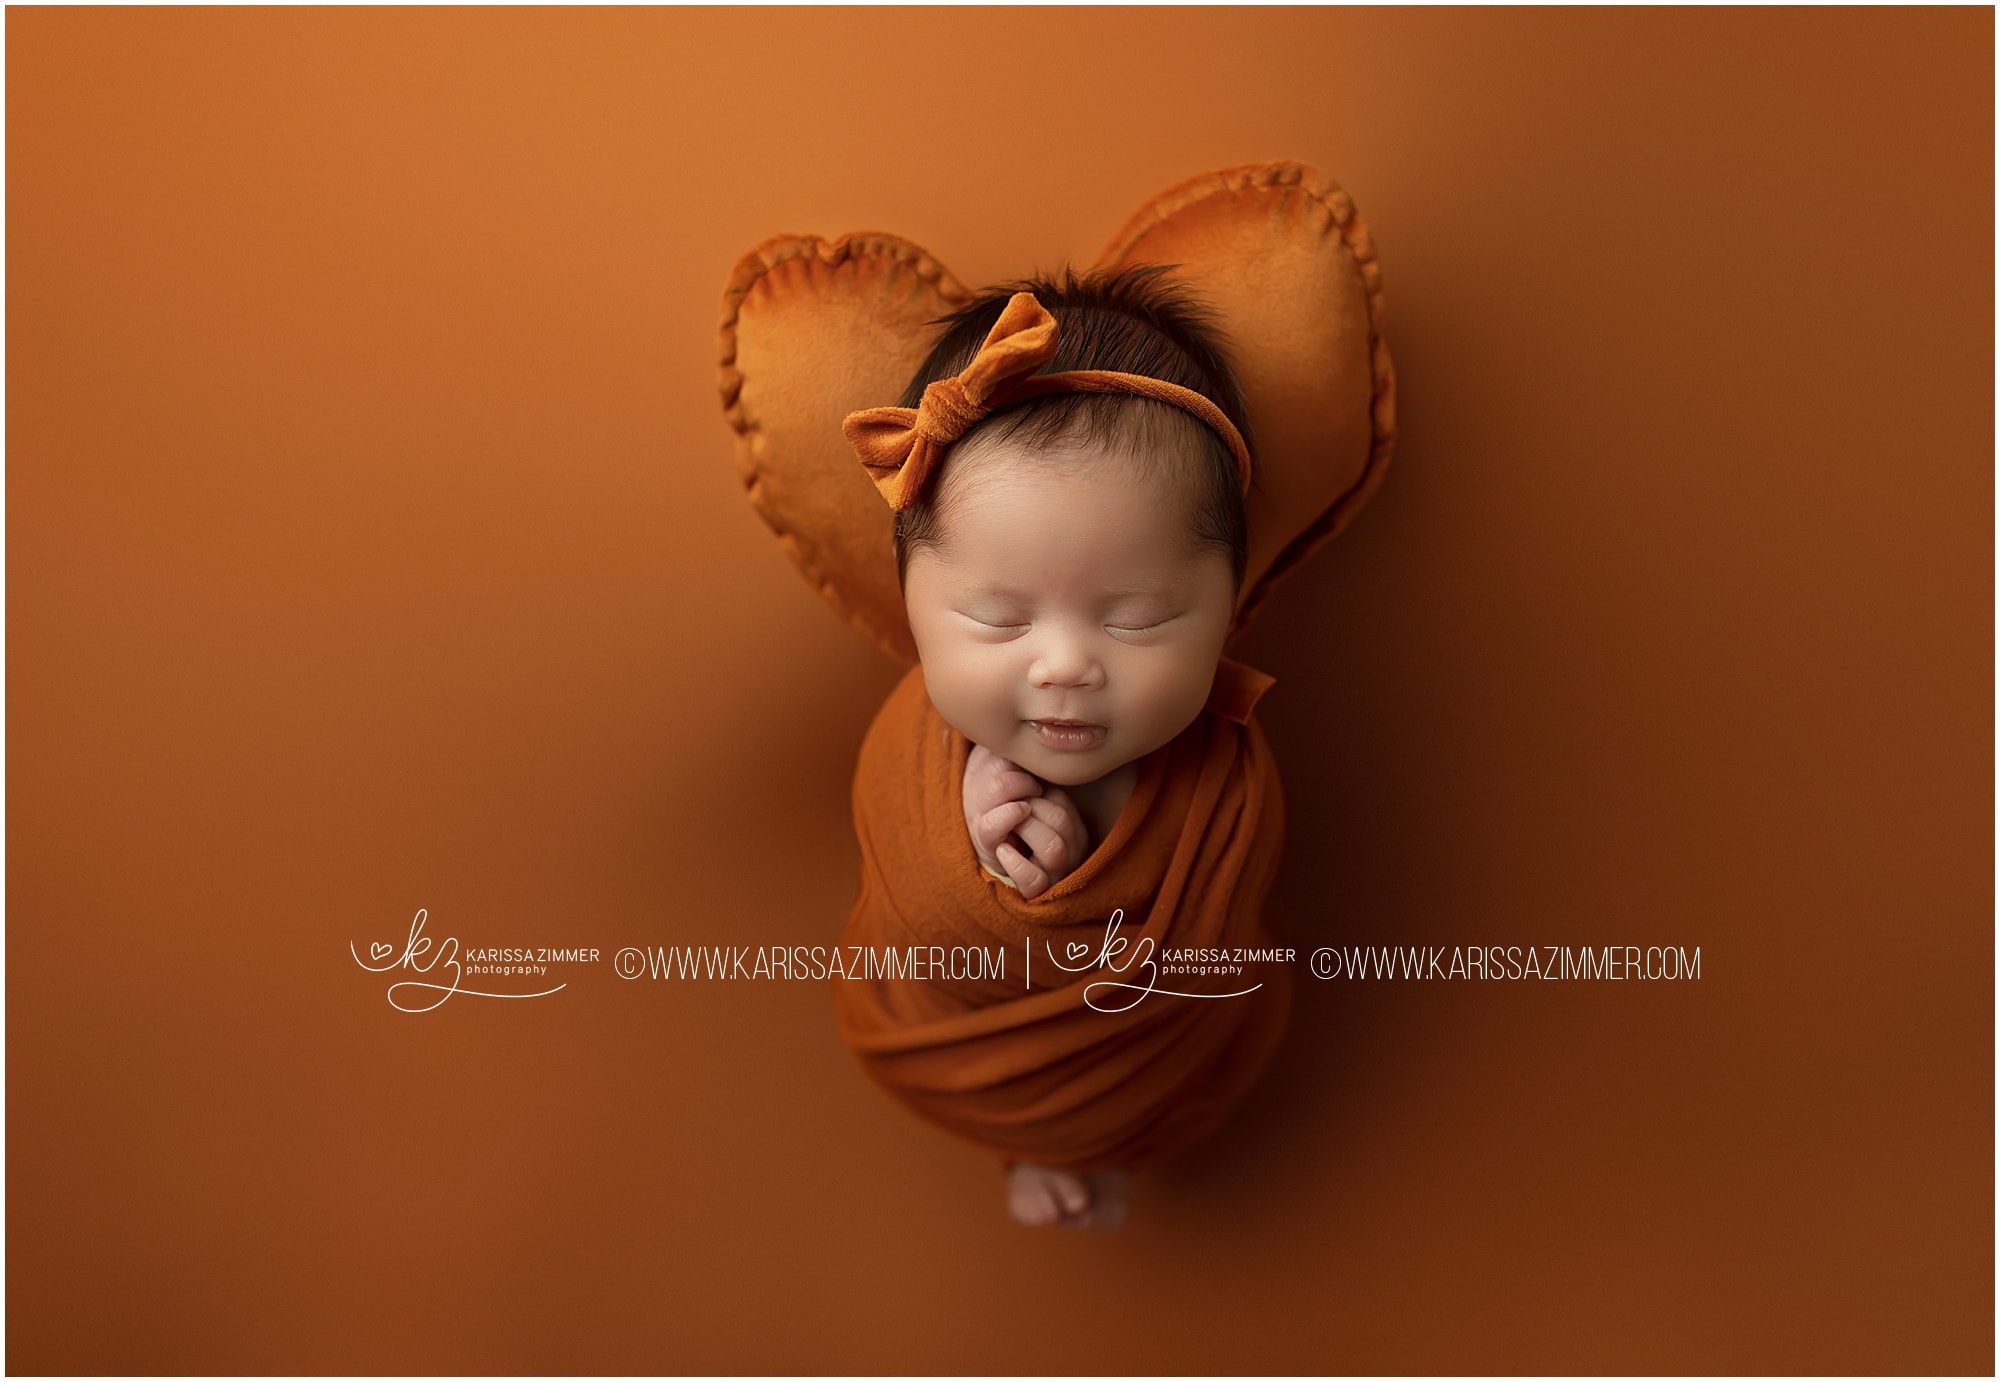 Newborn baby girl photographed on orange